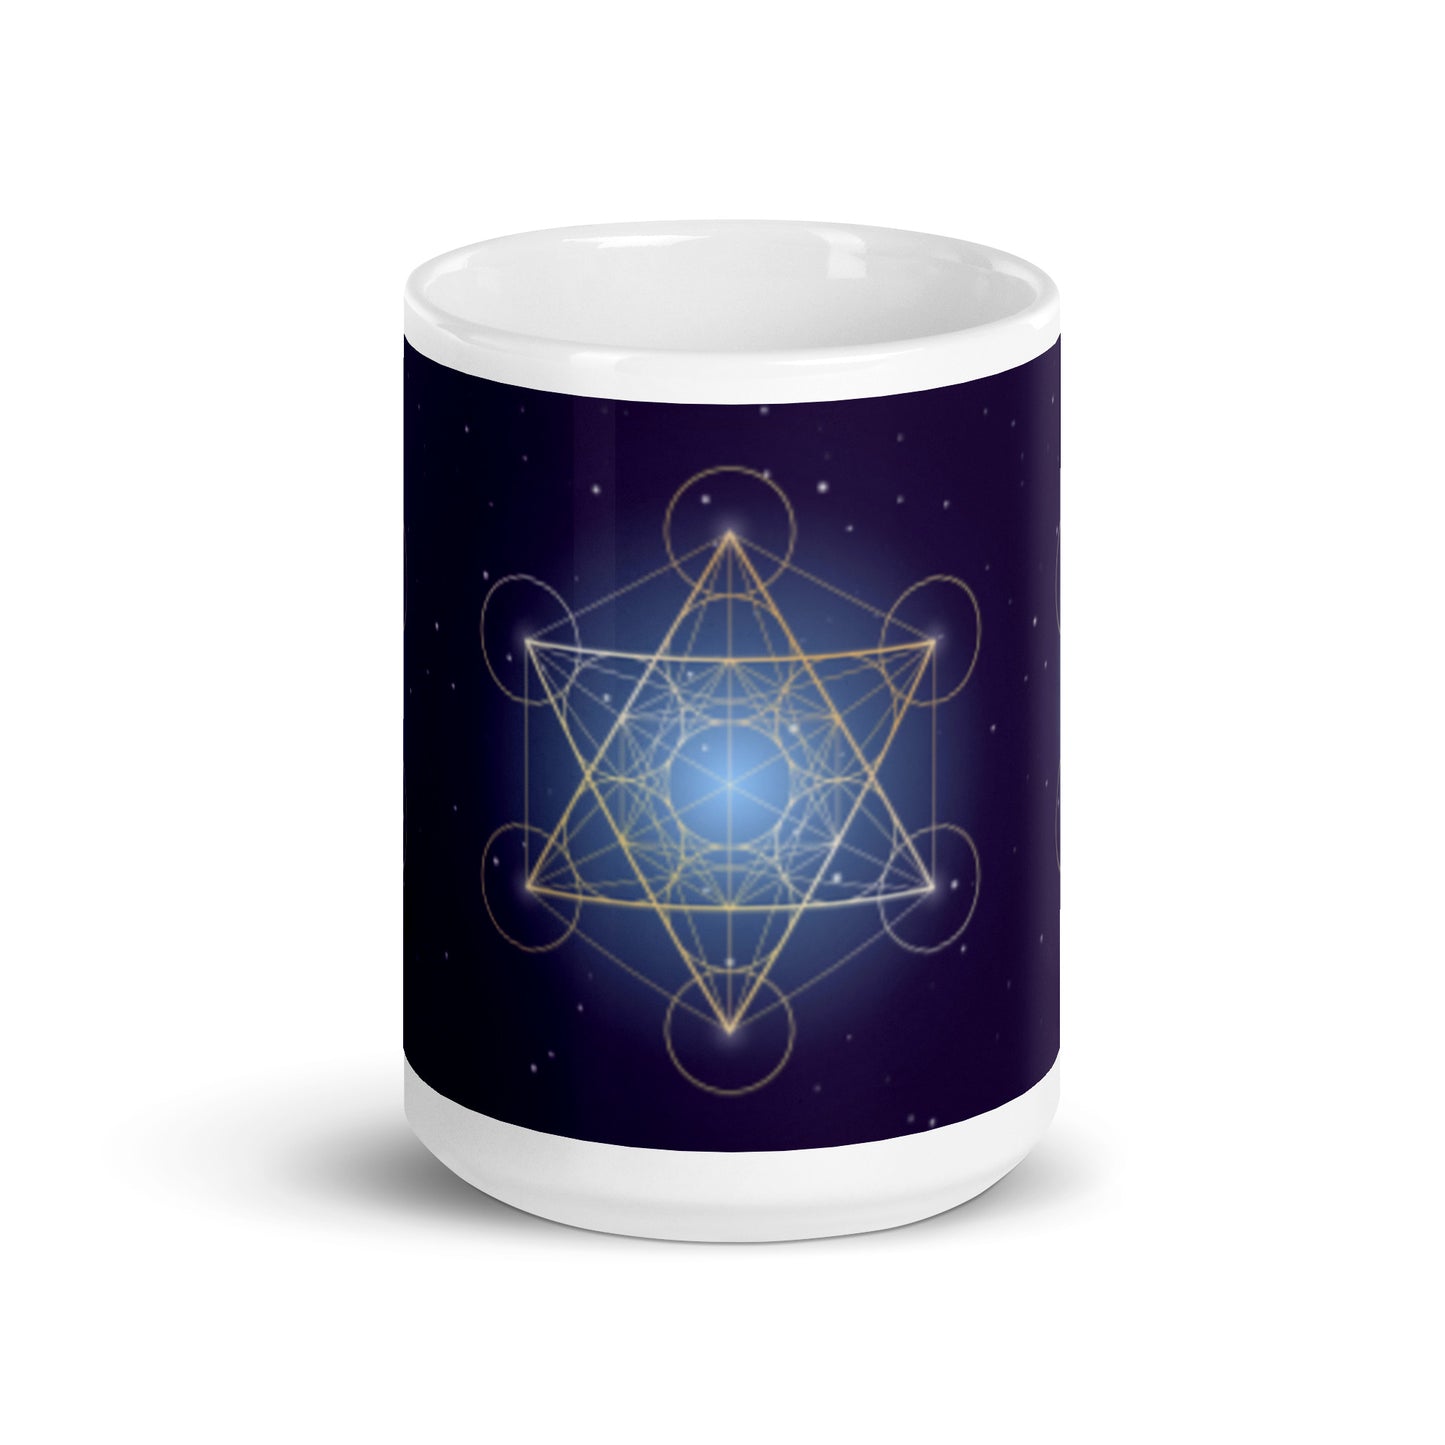 Archangel Metatrons cube, mug